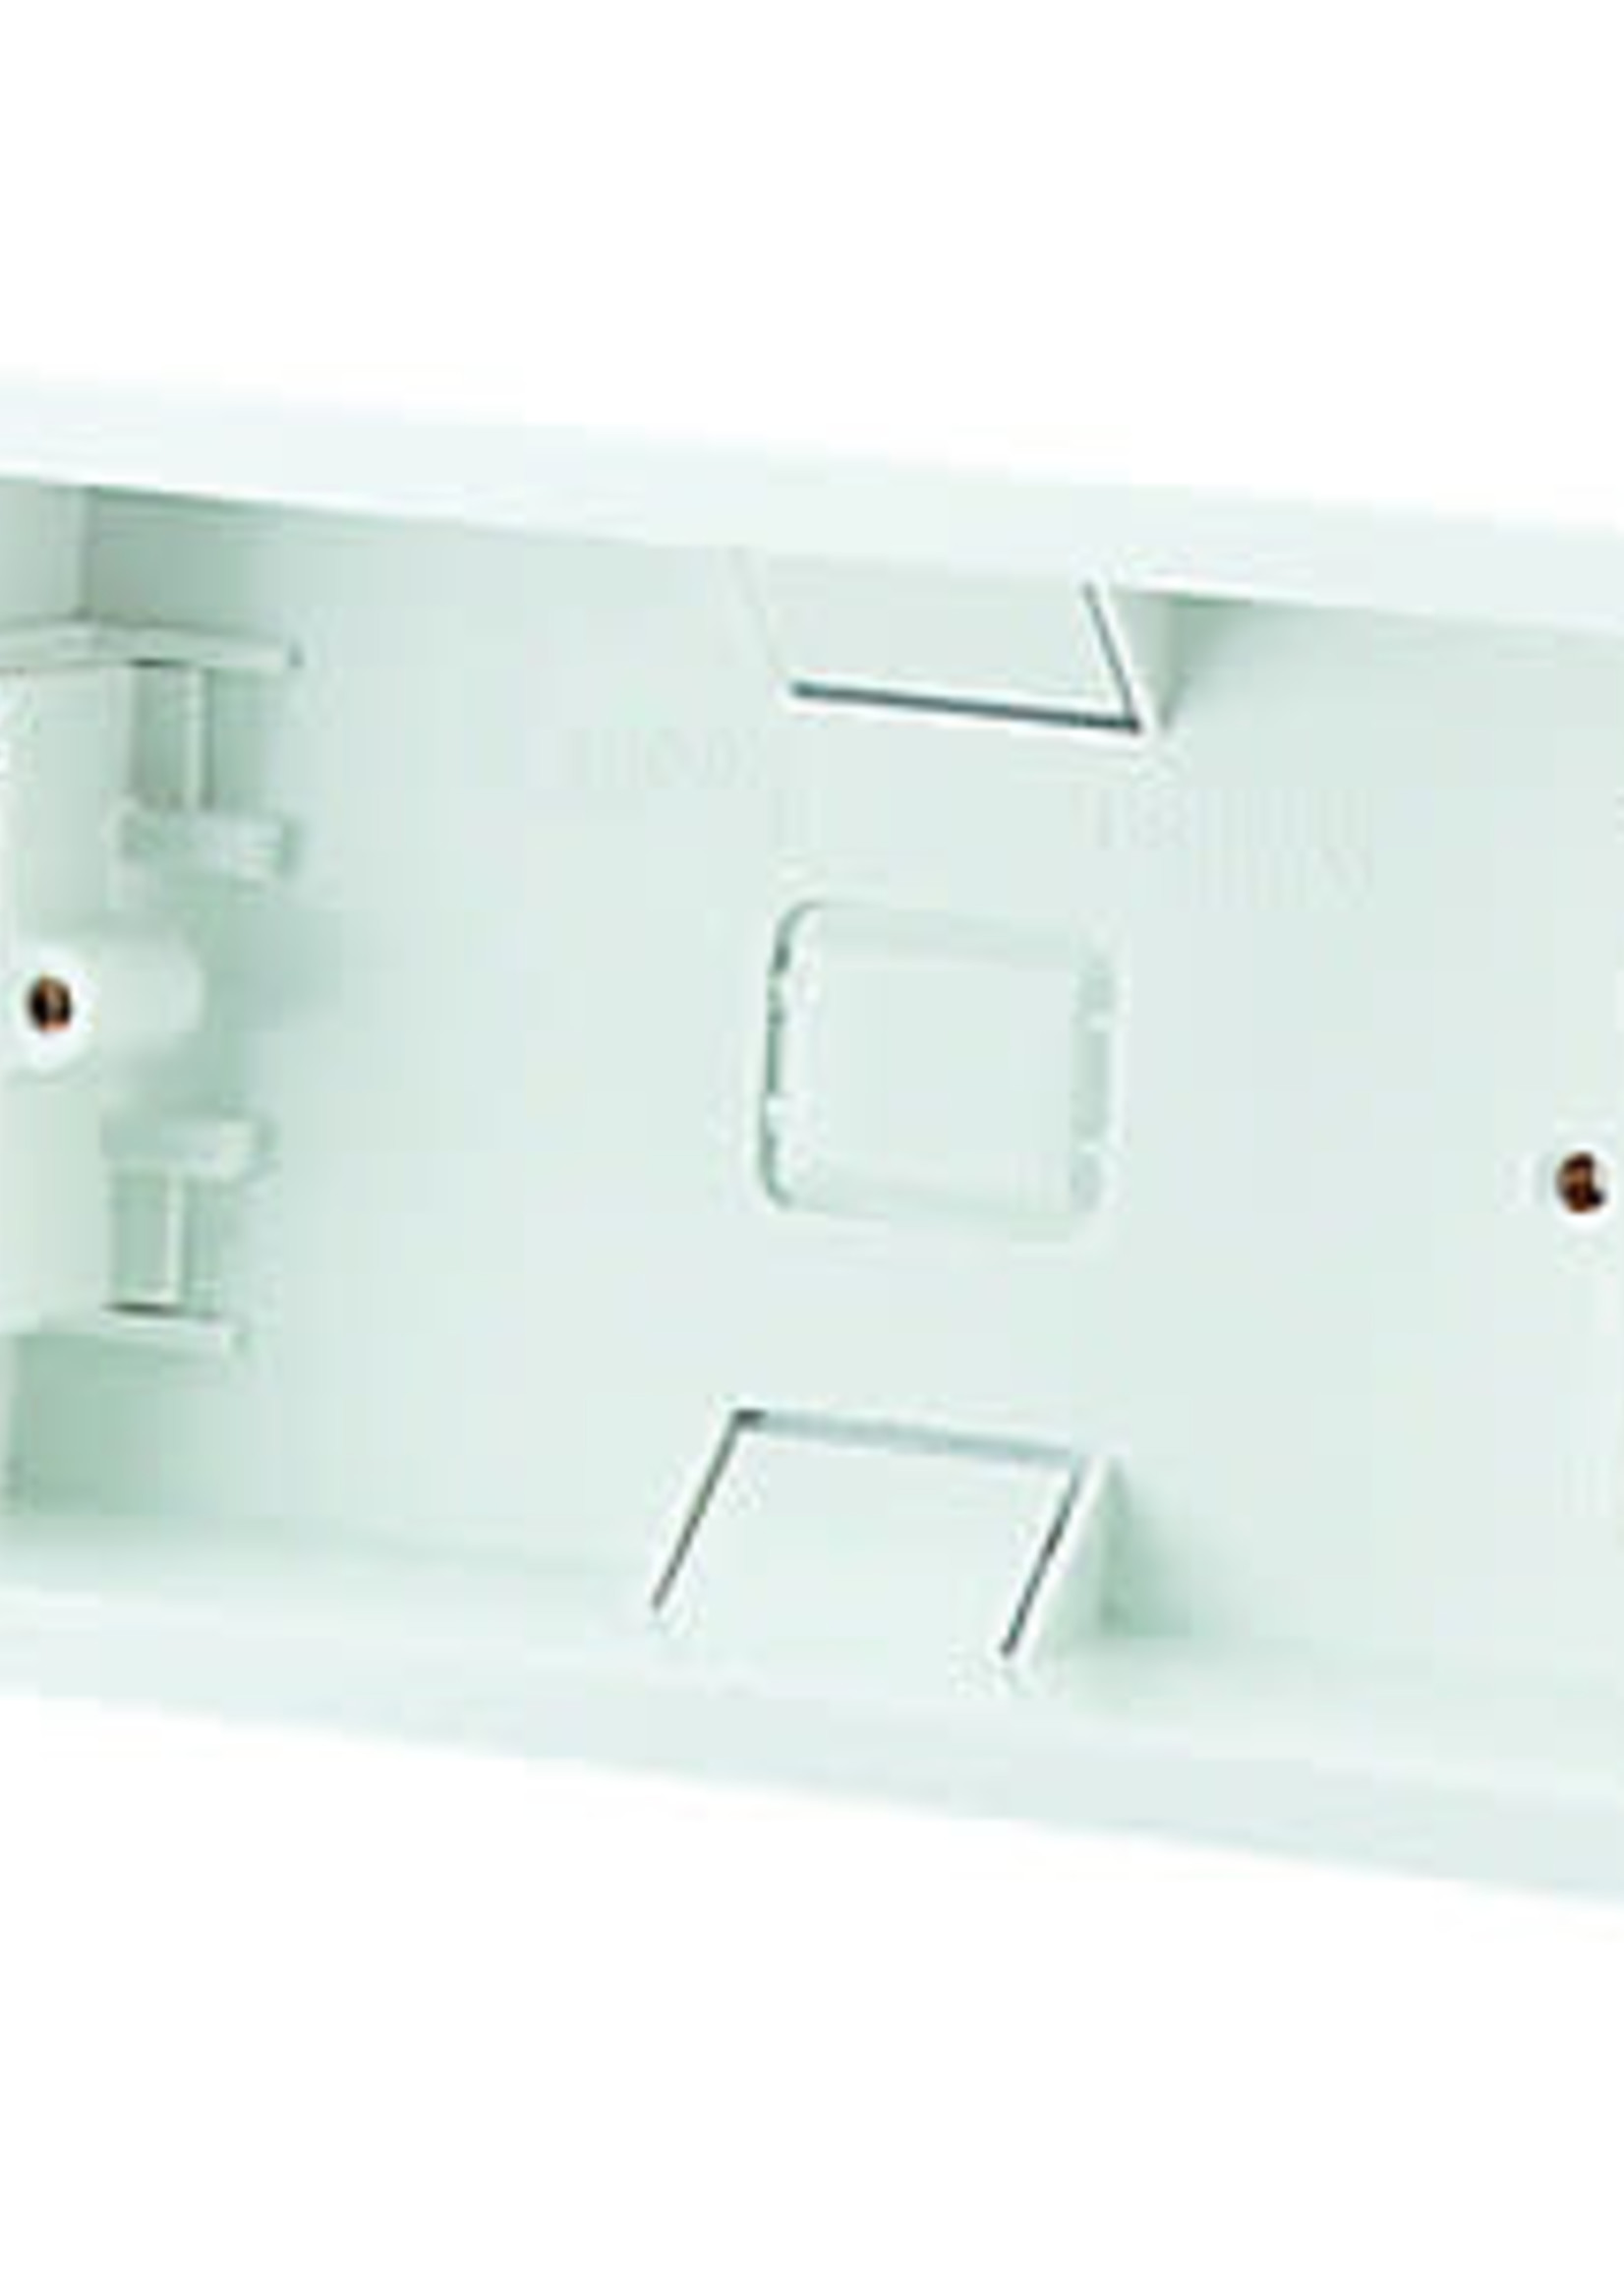 Pro-Elec Pro-Elec Dry Lining Box Double 35mm